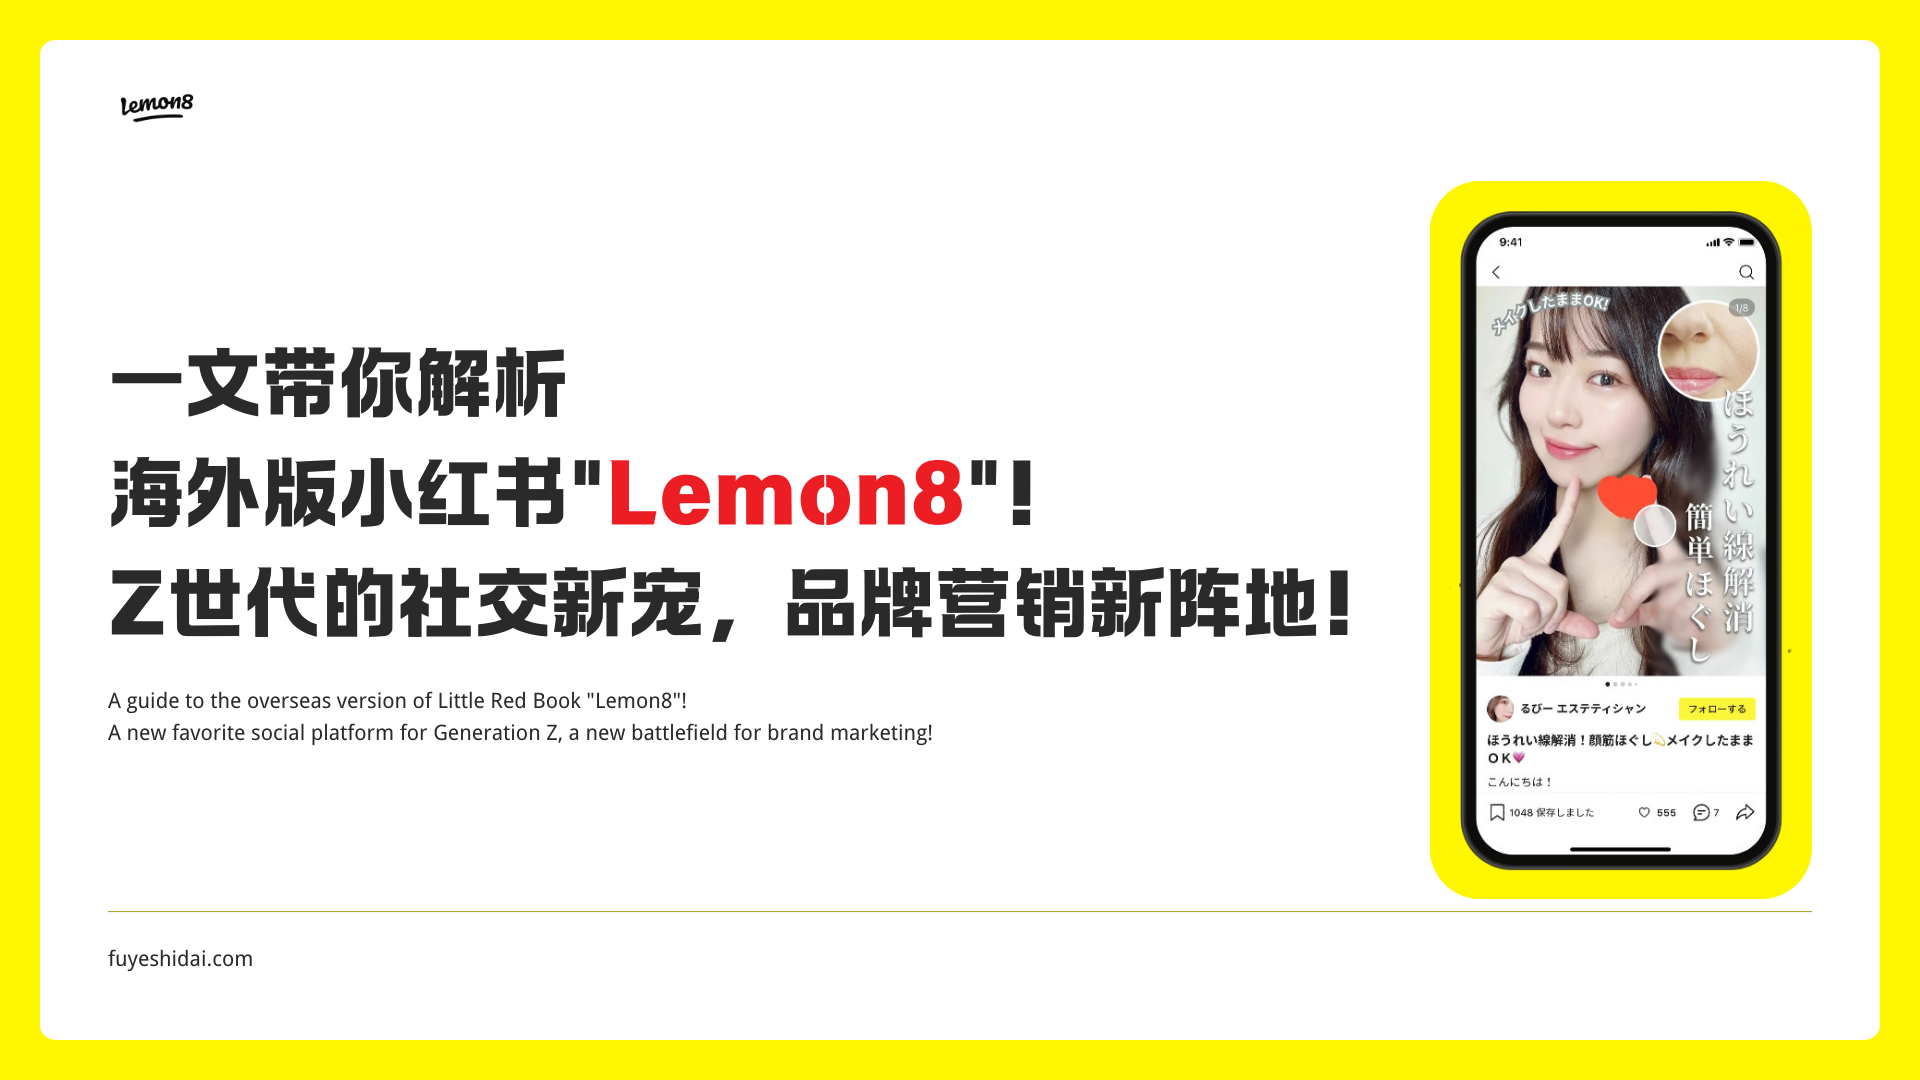 snpost lemon8 20240608 tumnail